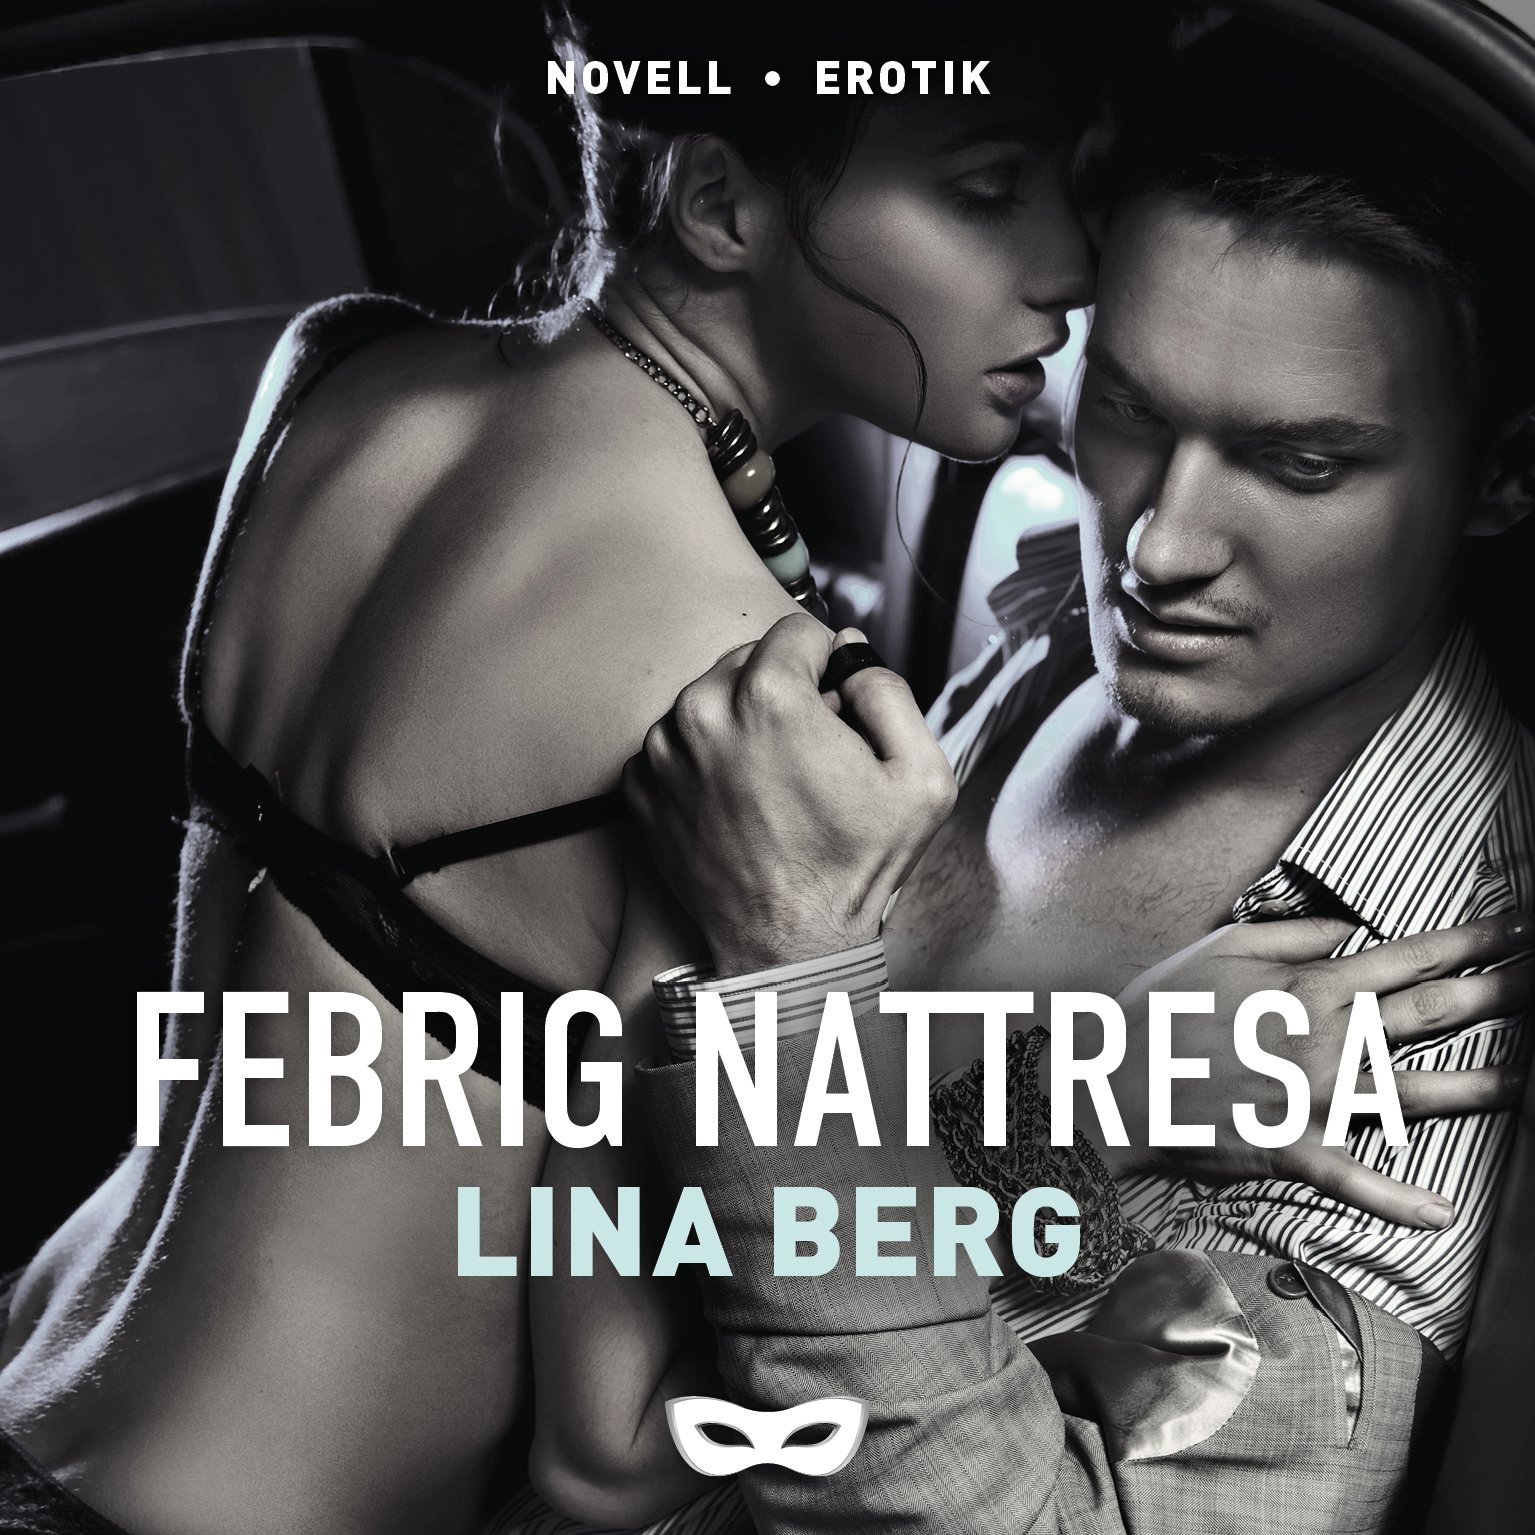 FEB Lina Berg Febrig nattresa omslag audio.jpg